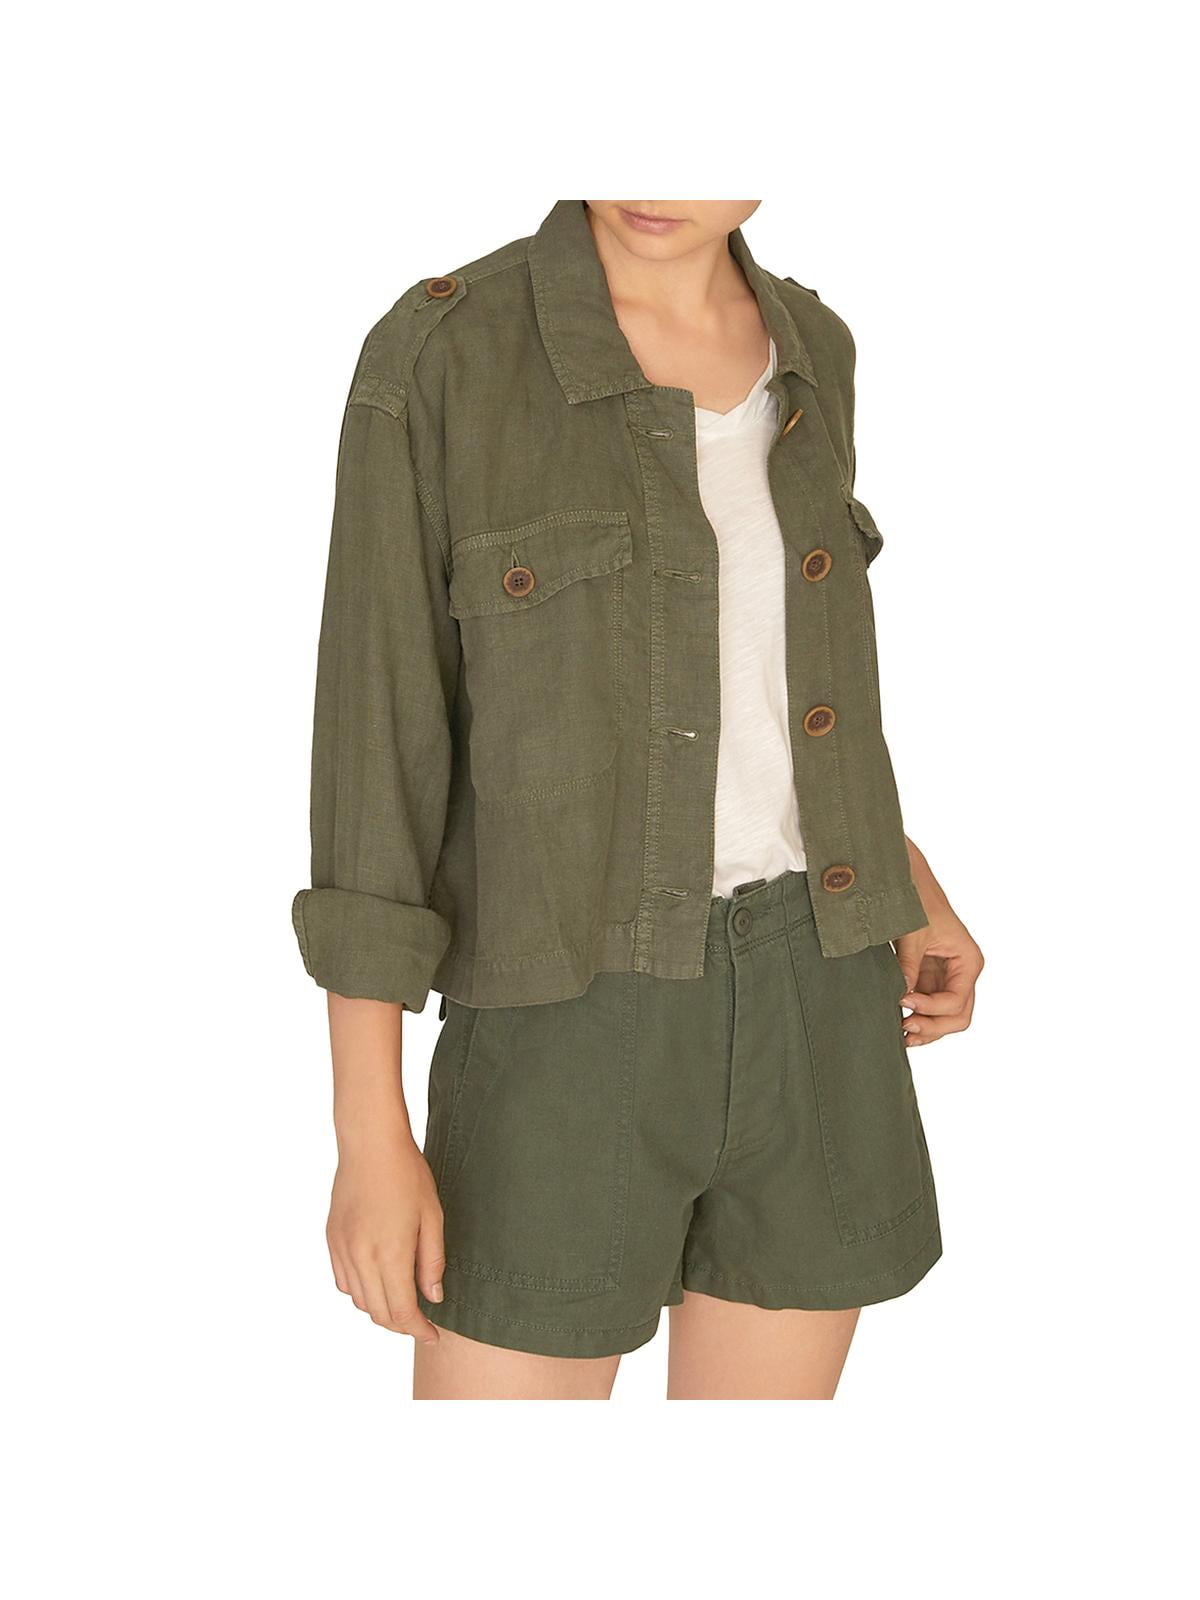 short military jacket womens